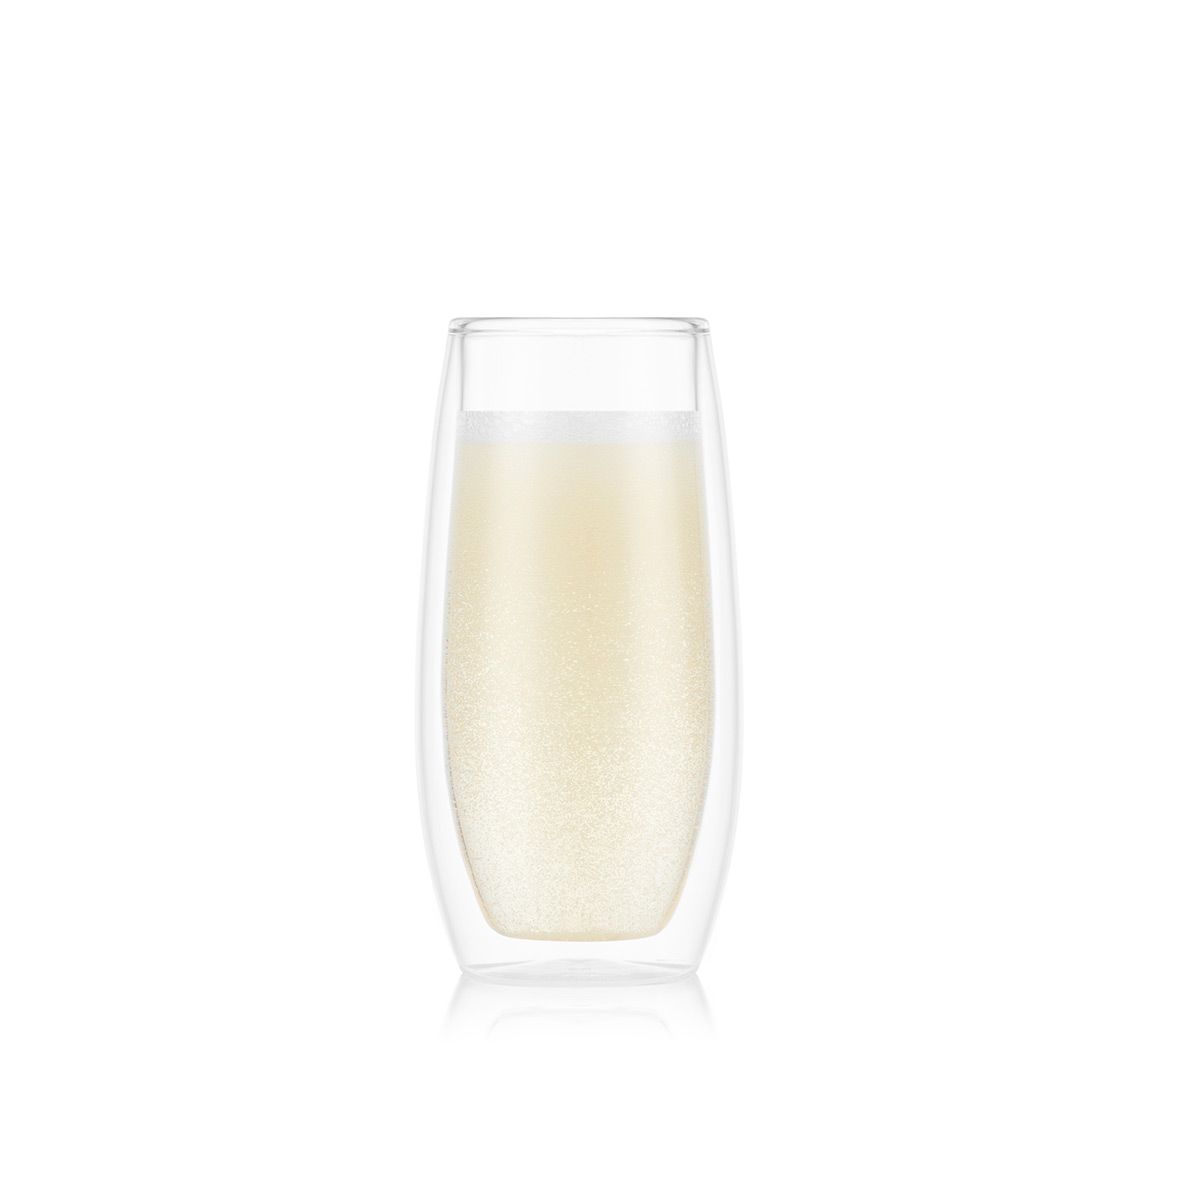 Bodum Skål Double Wall Glasses 2 Pcs., Champagne 0.2 L